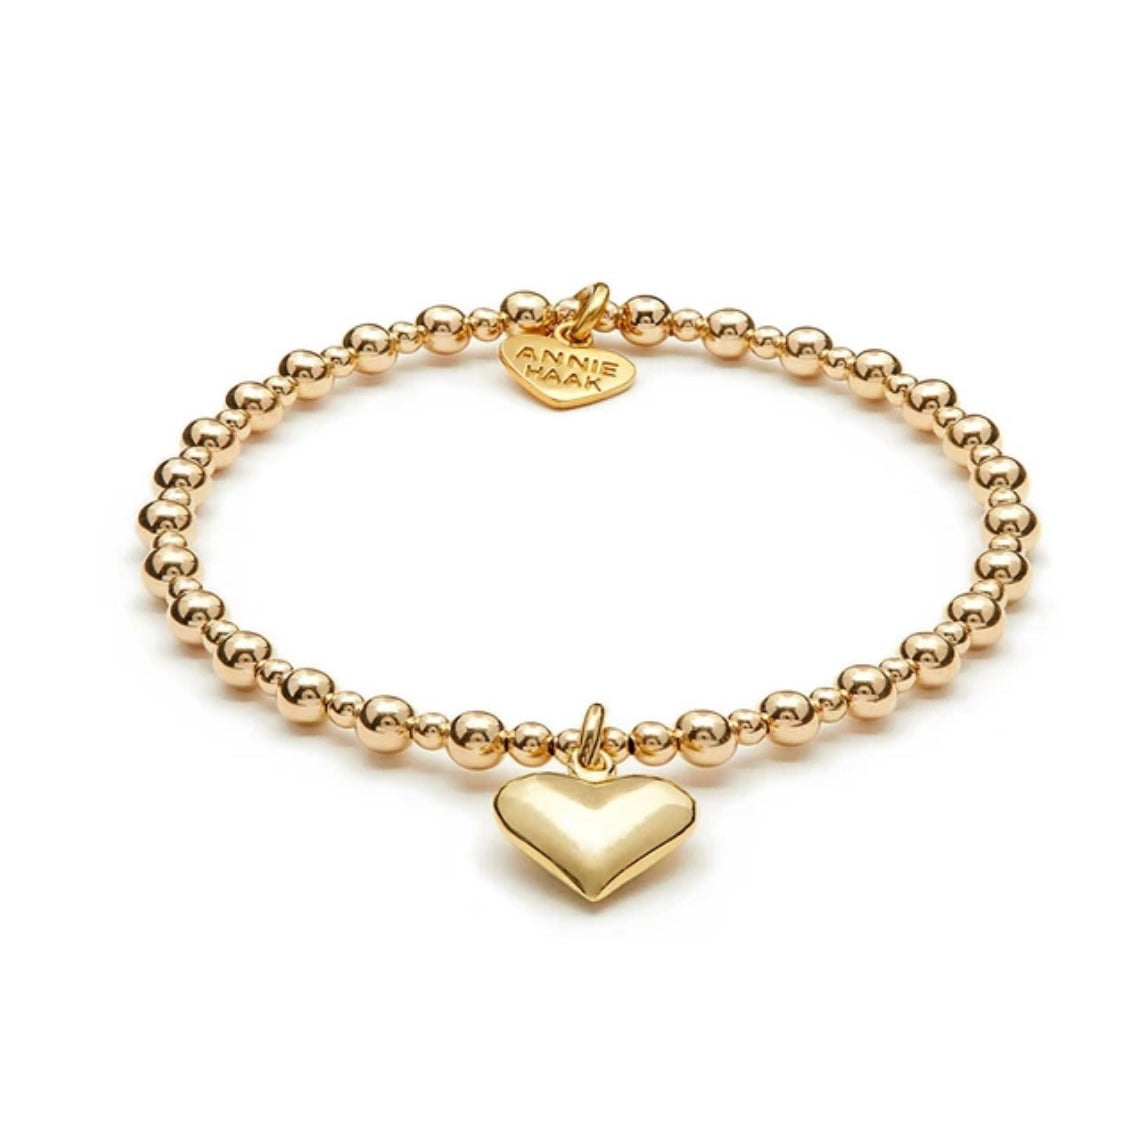 Annie Haak Mini Orchid Gold Bracelet - Solid Heart